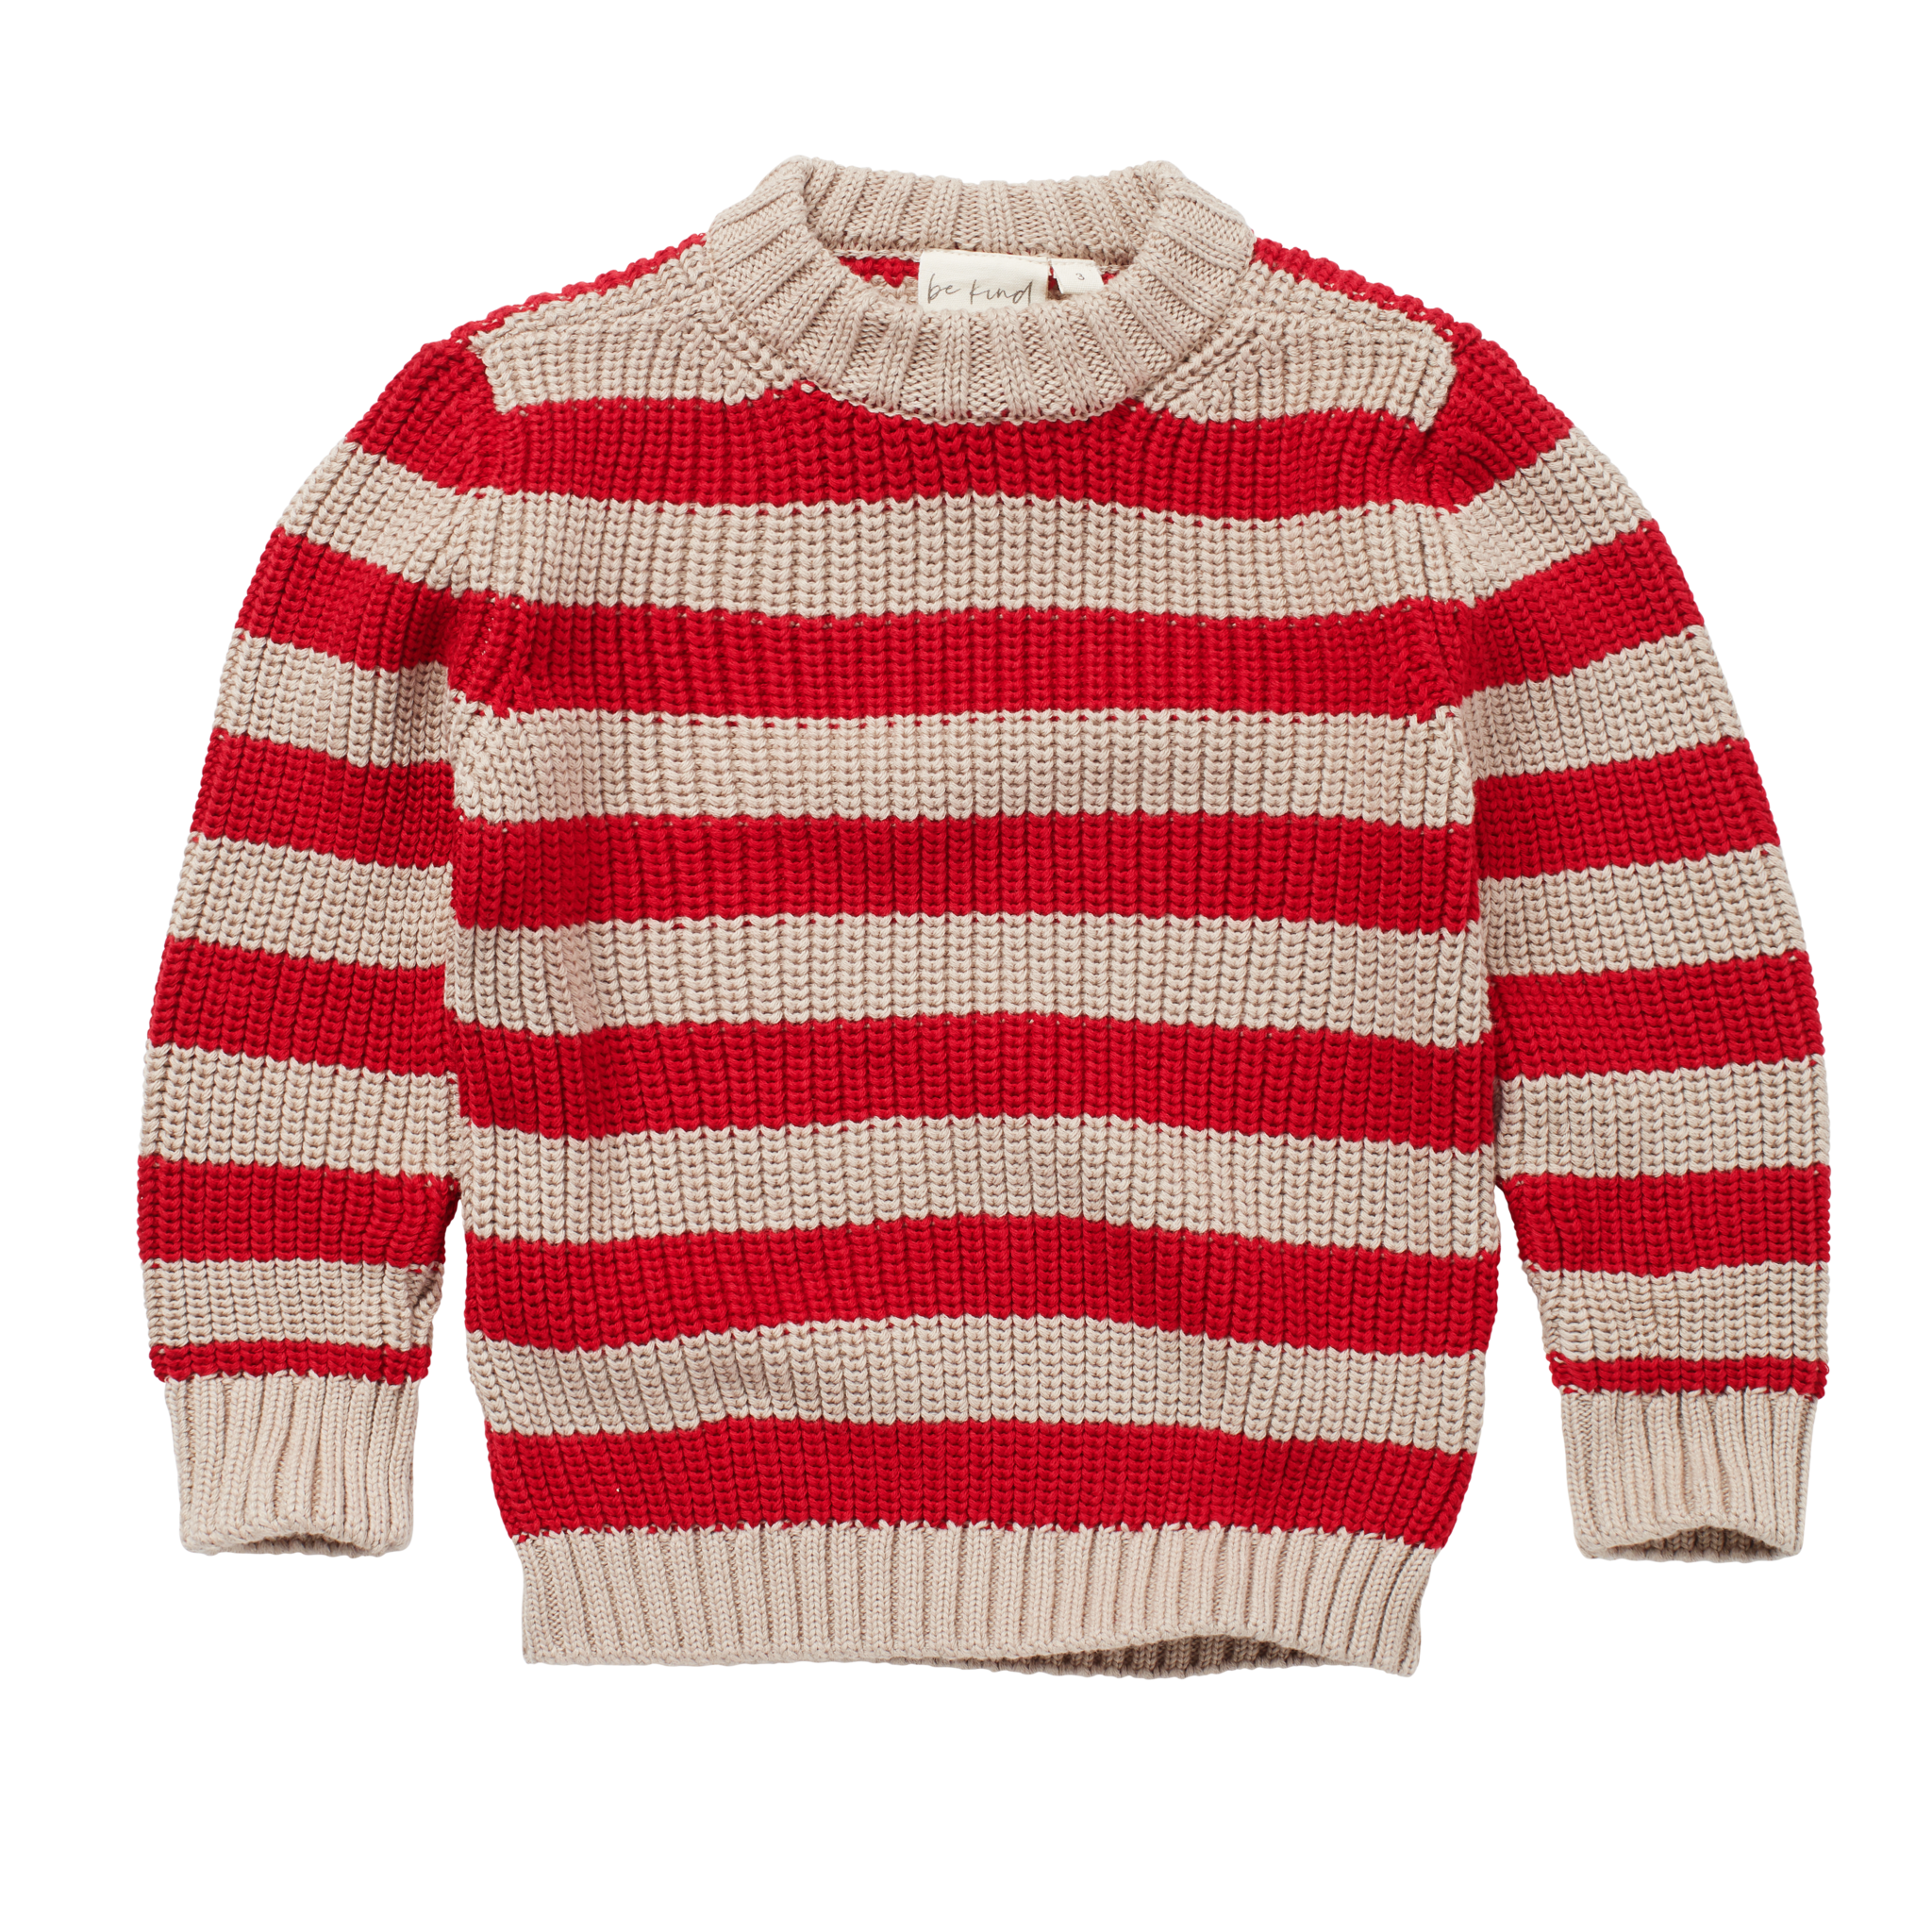 Vergelijkbaar kant Mijnenveld Skylar Sweater - Heavy Knit - Organic Cotton | Striped - Be Kind